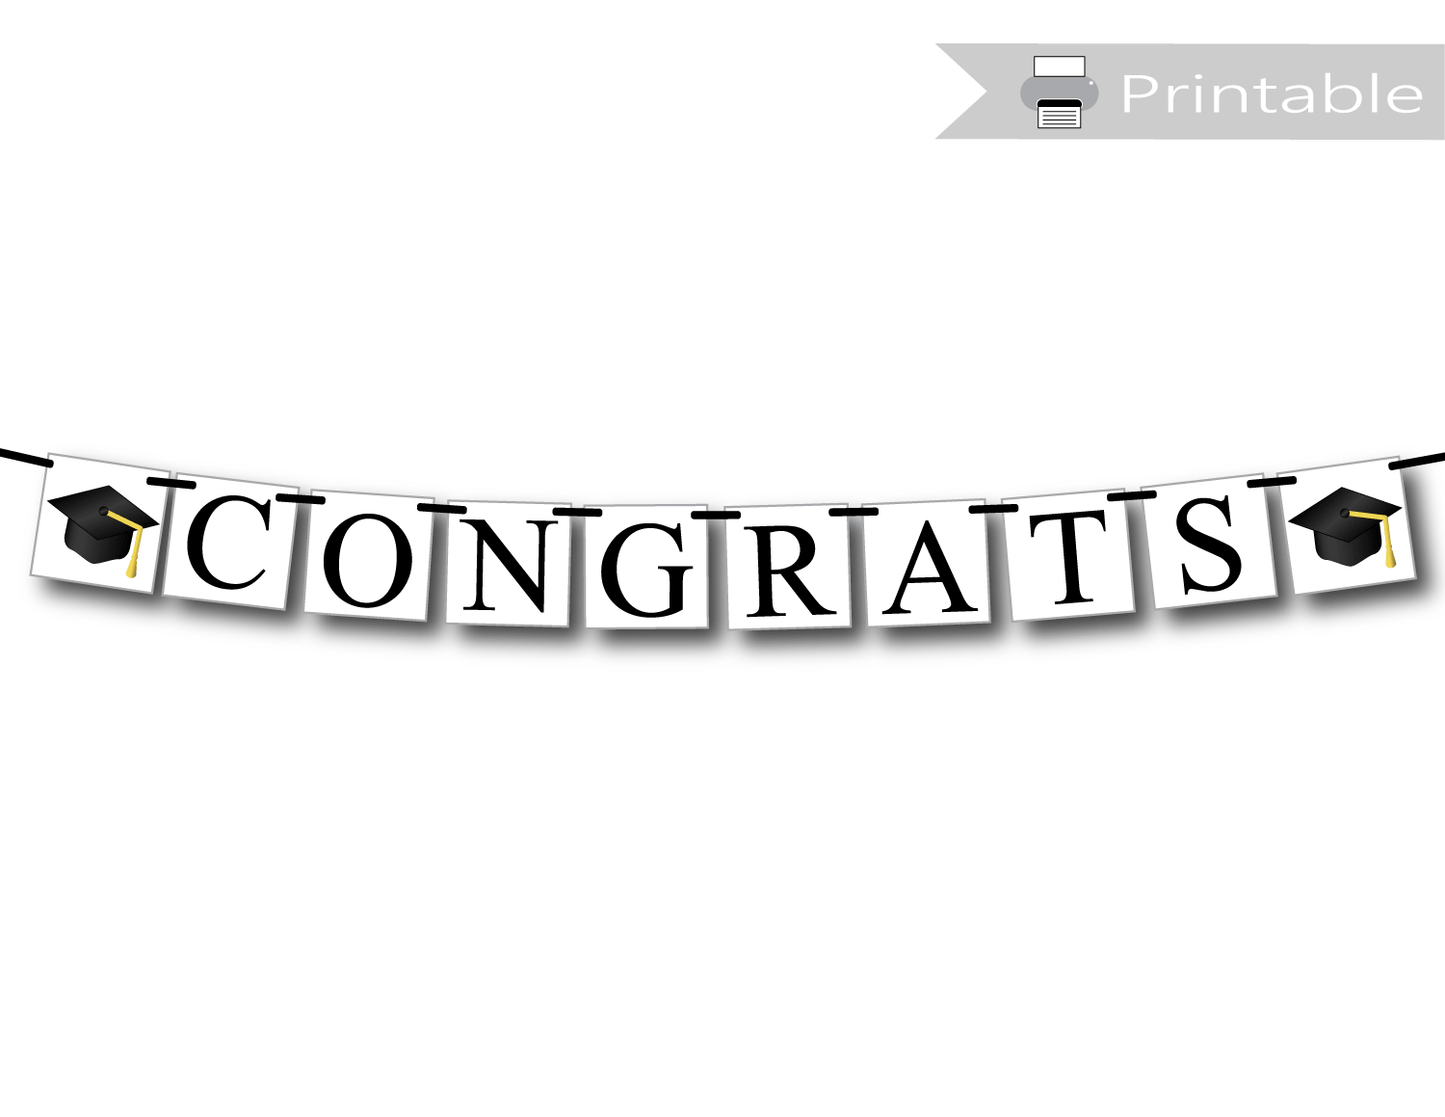 printable congrats banner graduation party decoration - Celebrating Together